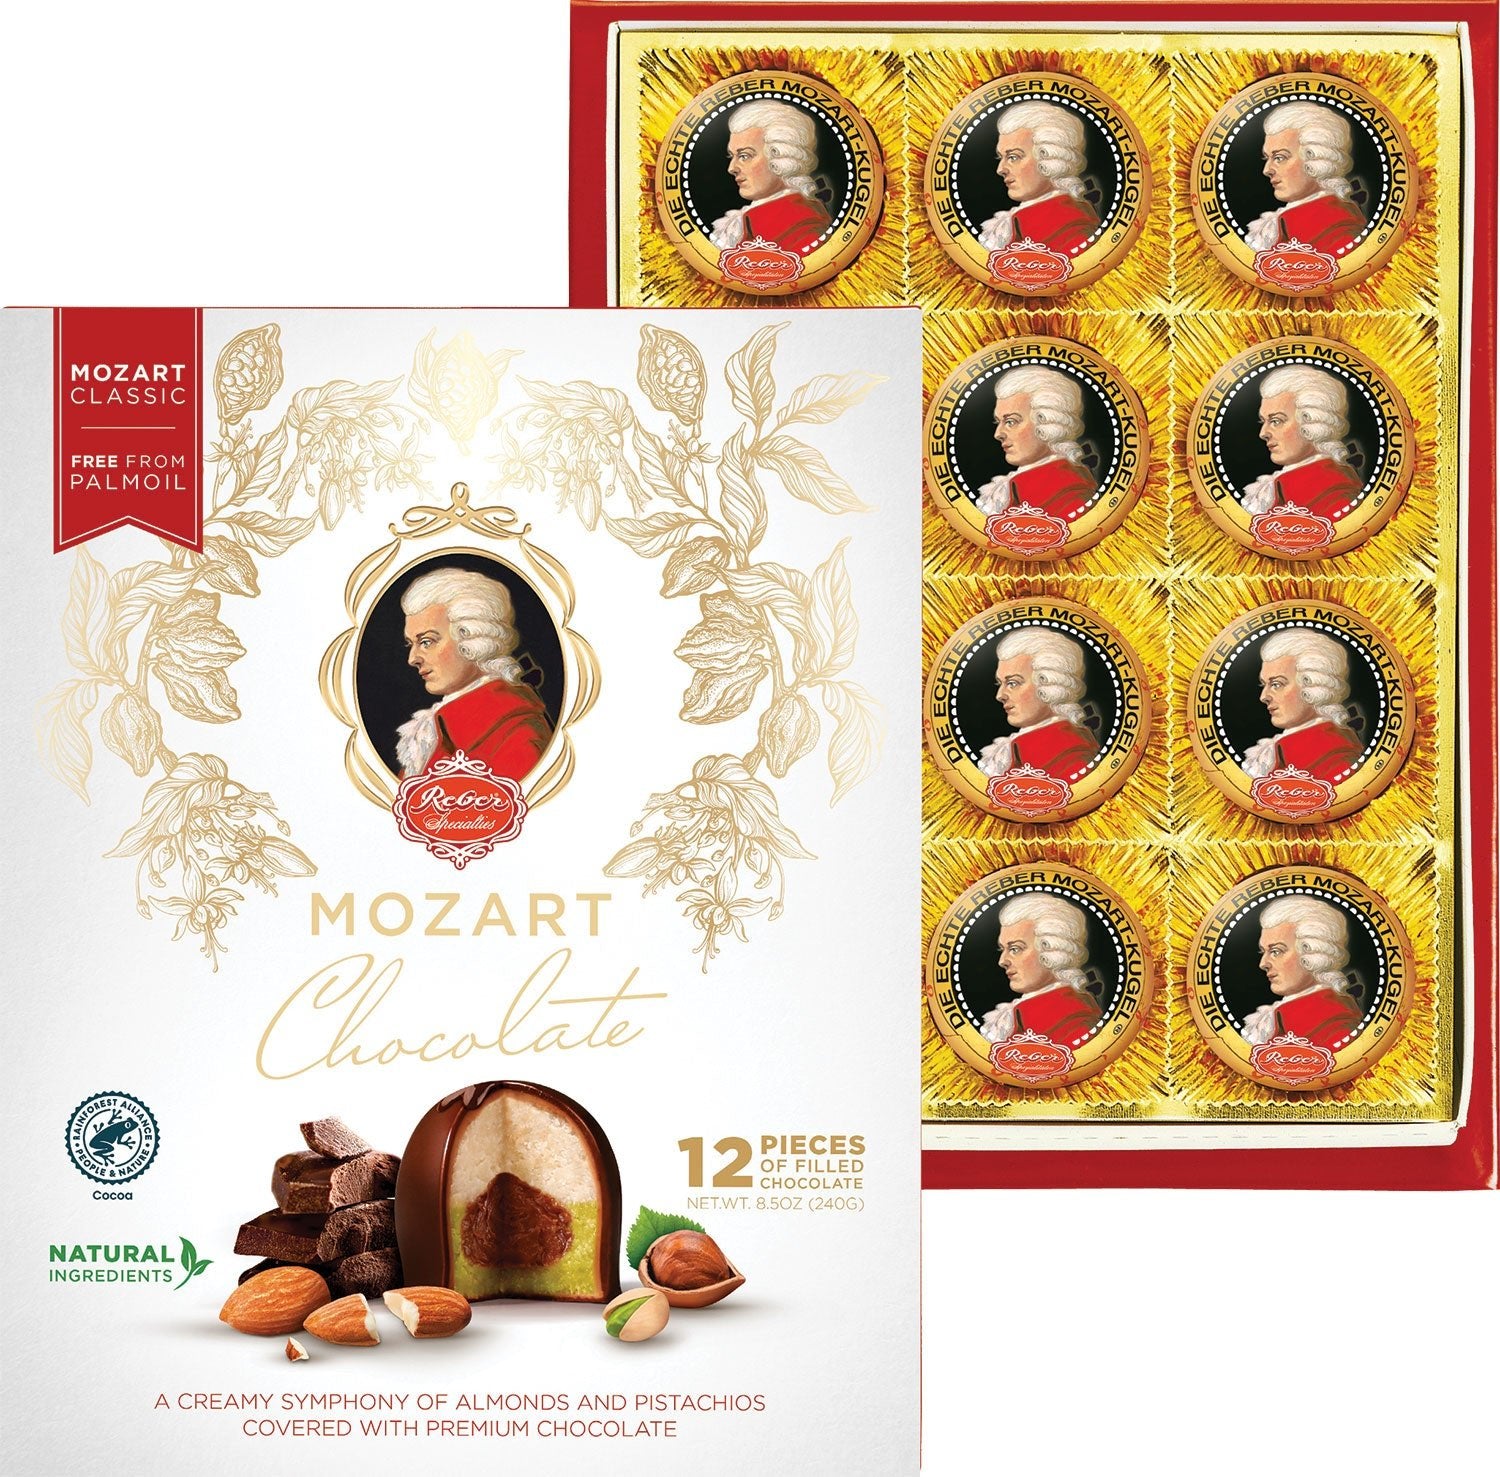 German Reber Mozart Kugeln Mozart Balls Filled Chocolates 8 Piece Bag